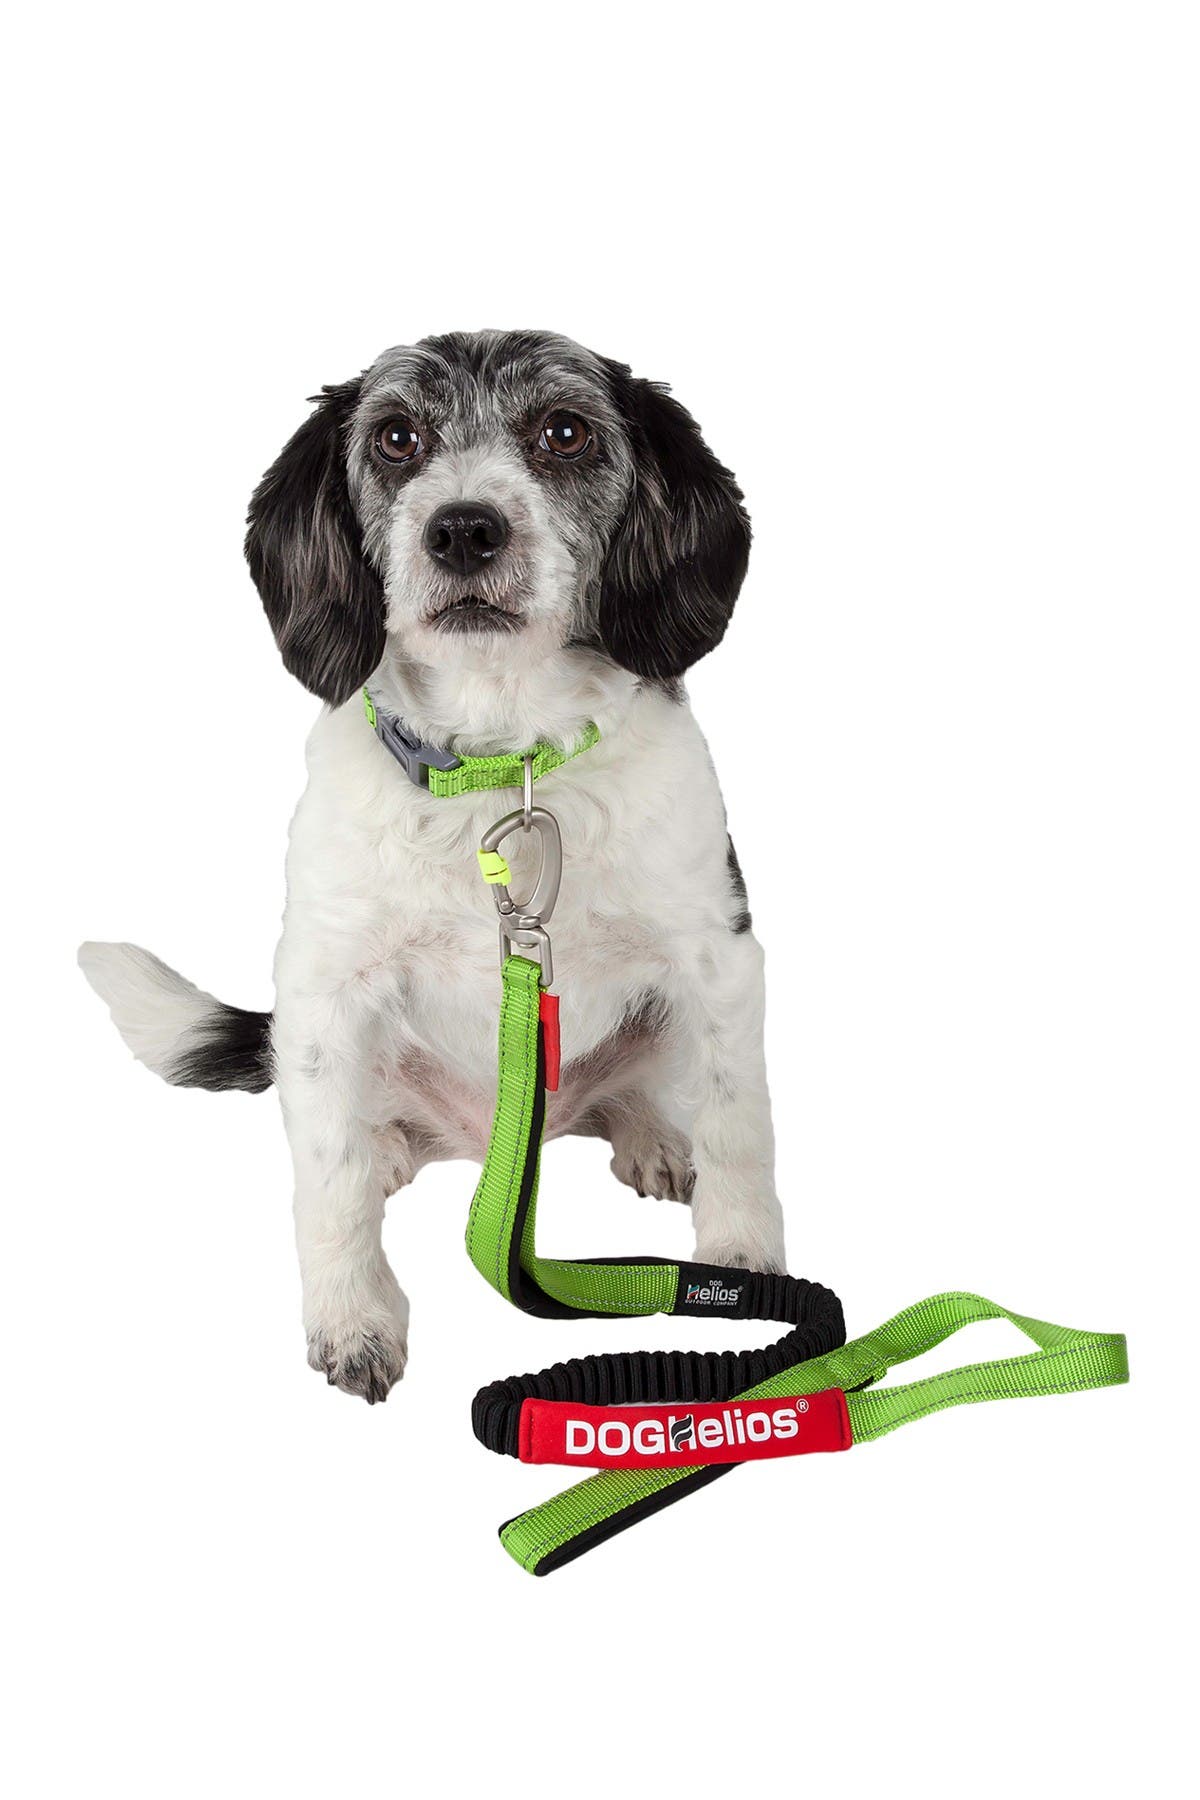 indestructible dog leash